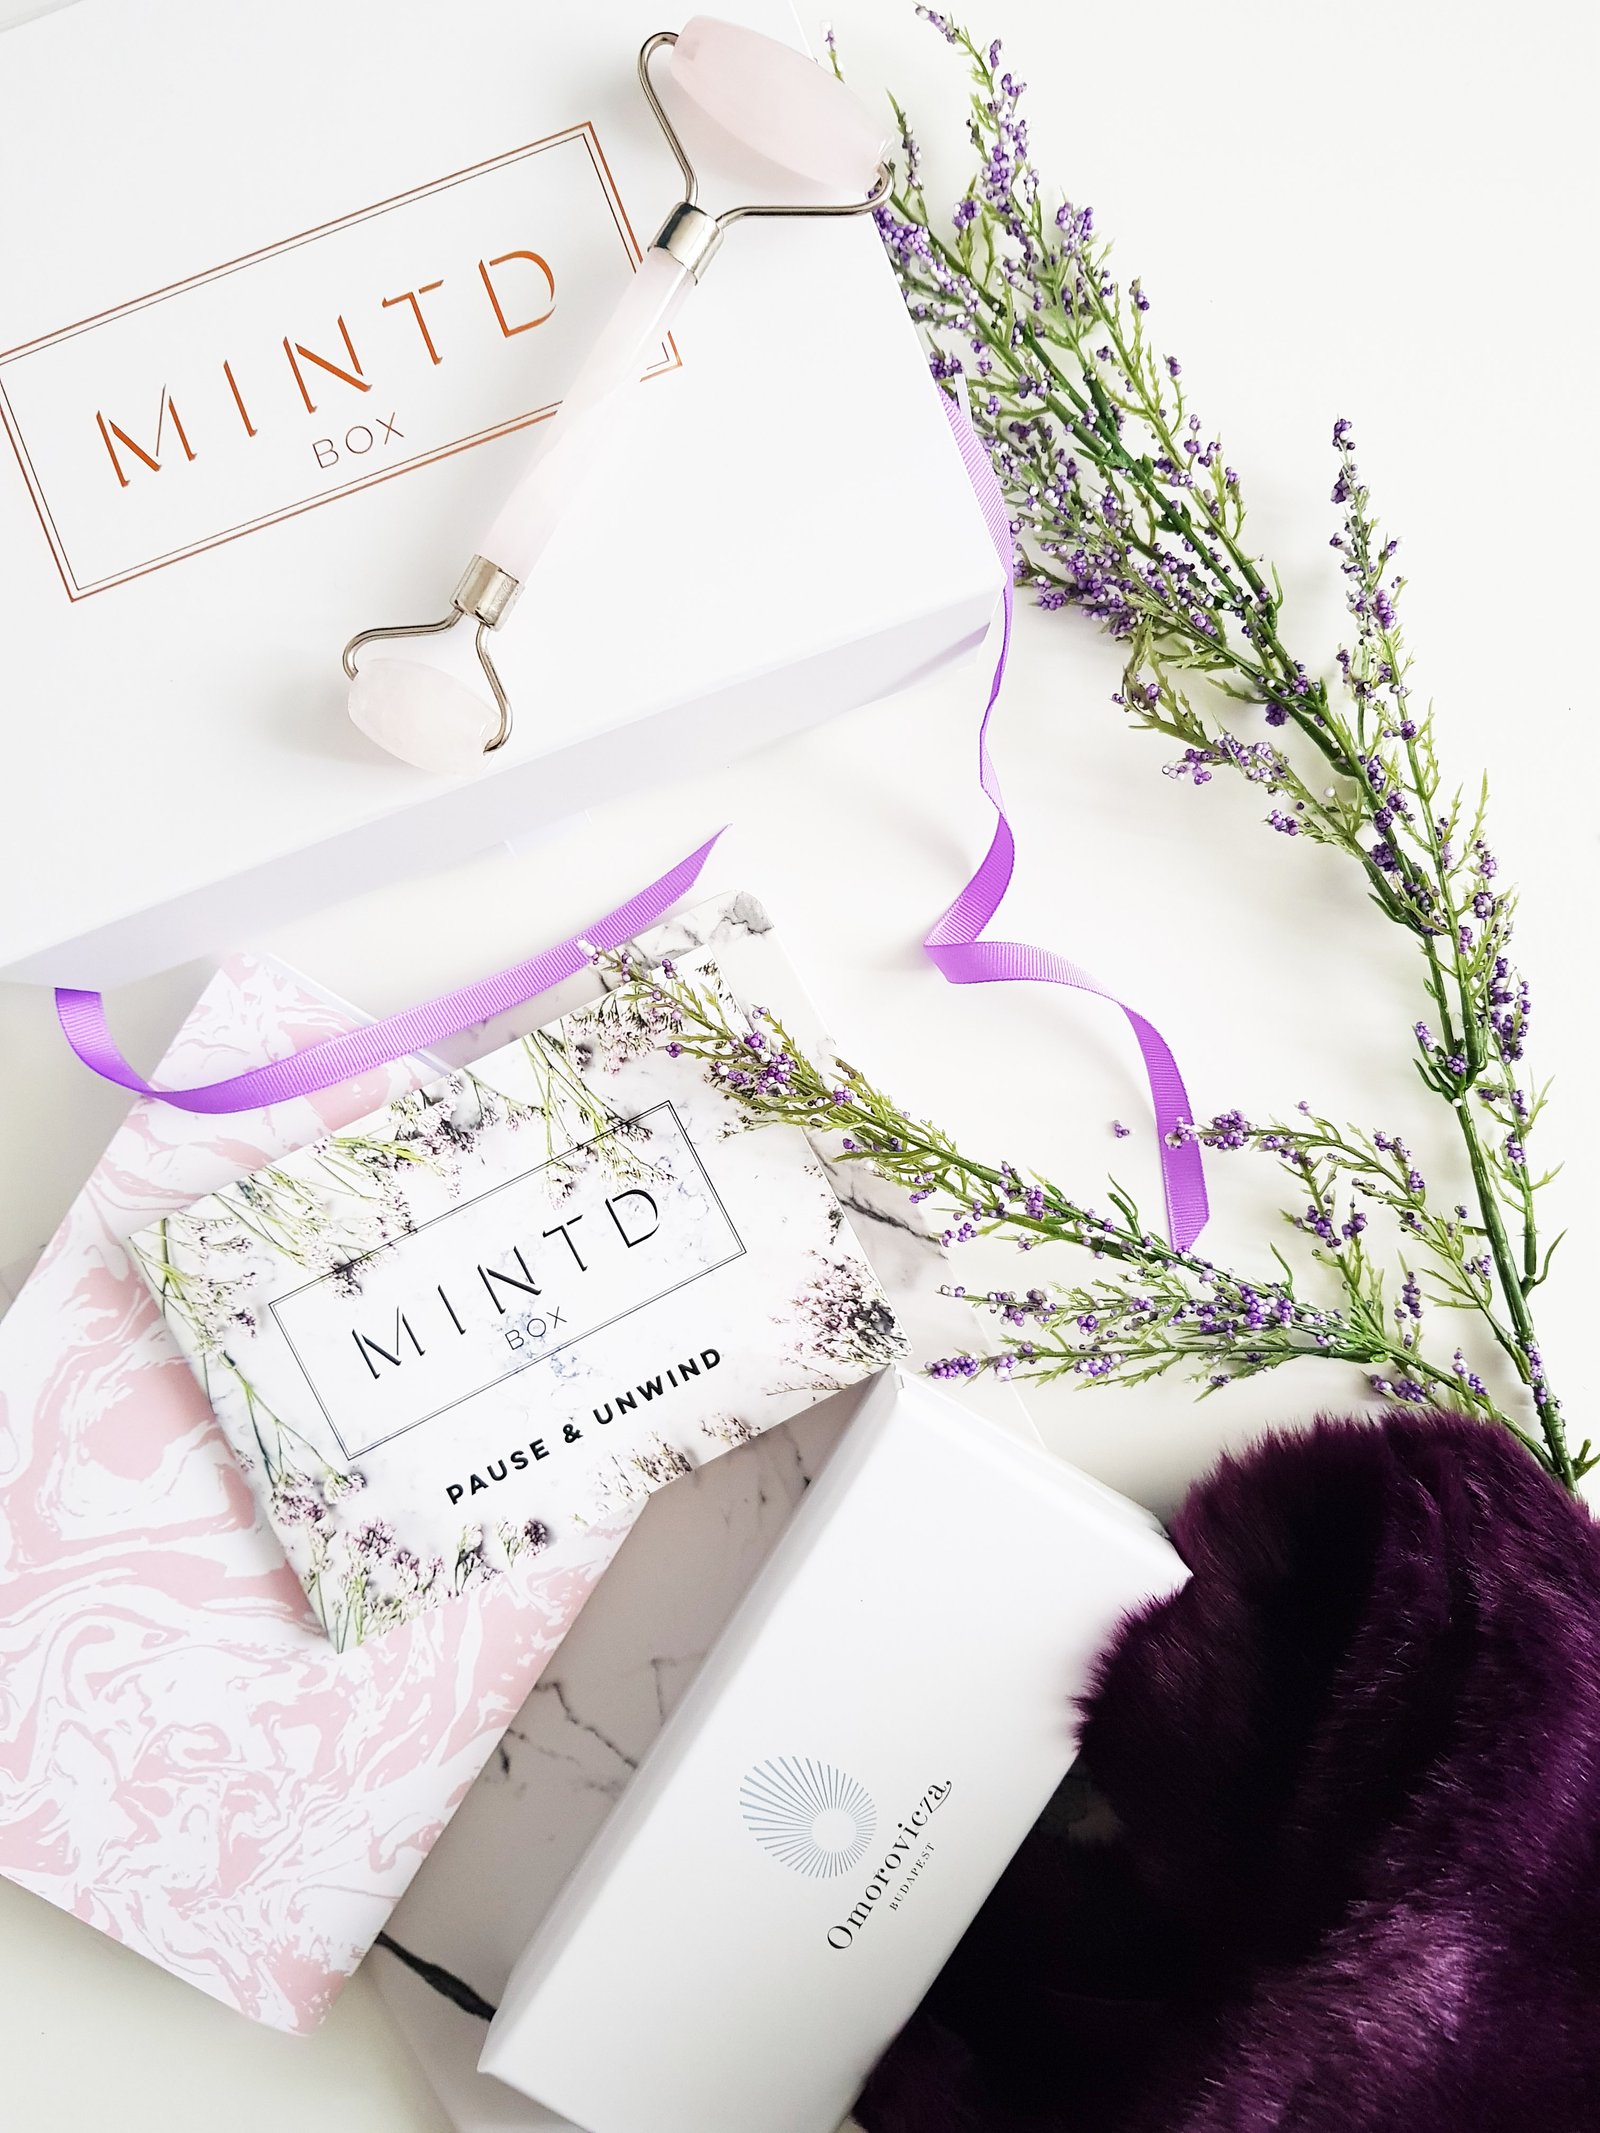 Mintd Box - Omorovicza Rose Quartz roller - Luxury Beauty Subscription Box